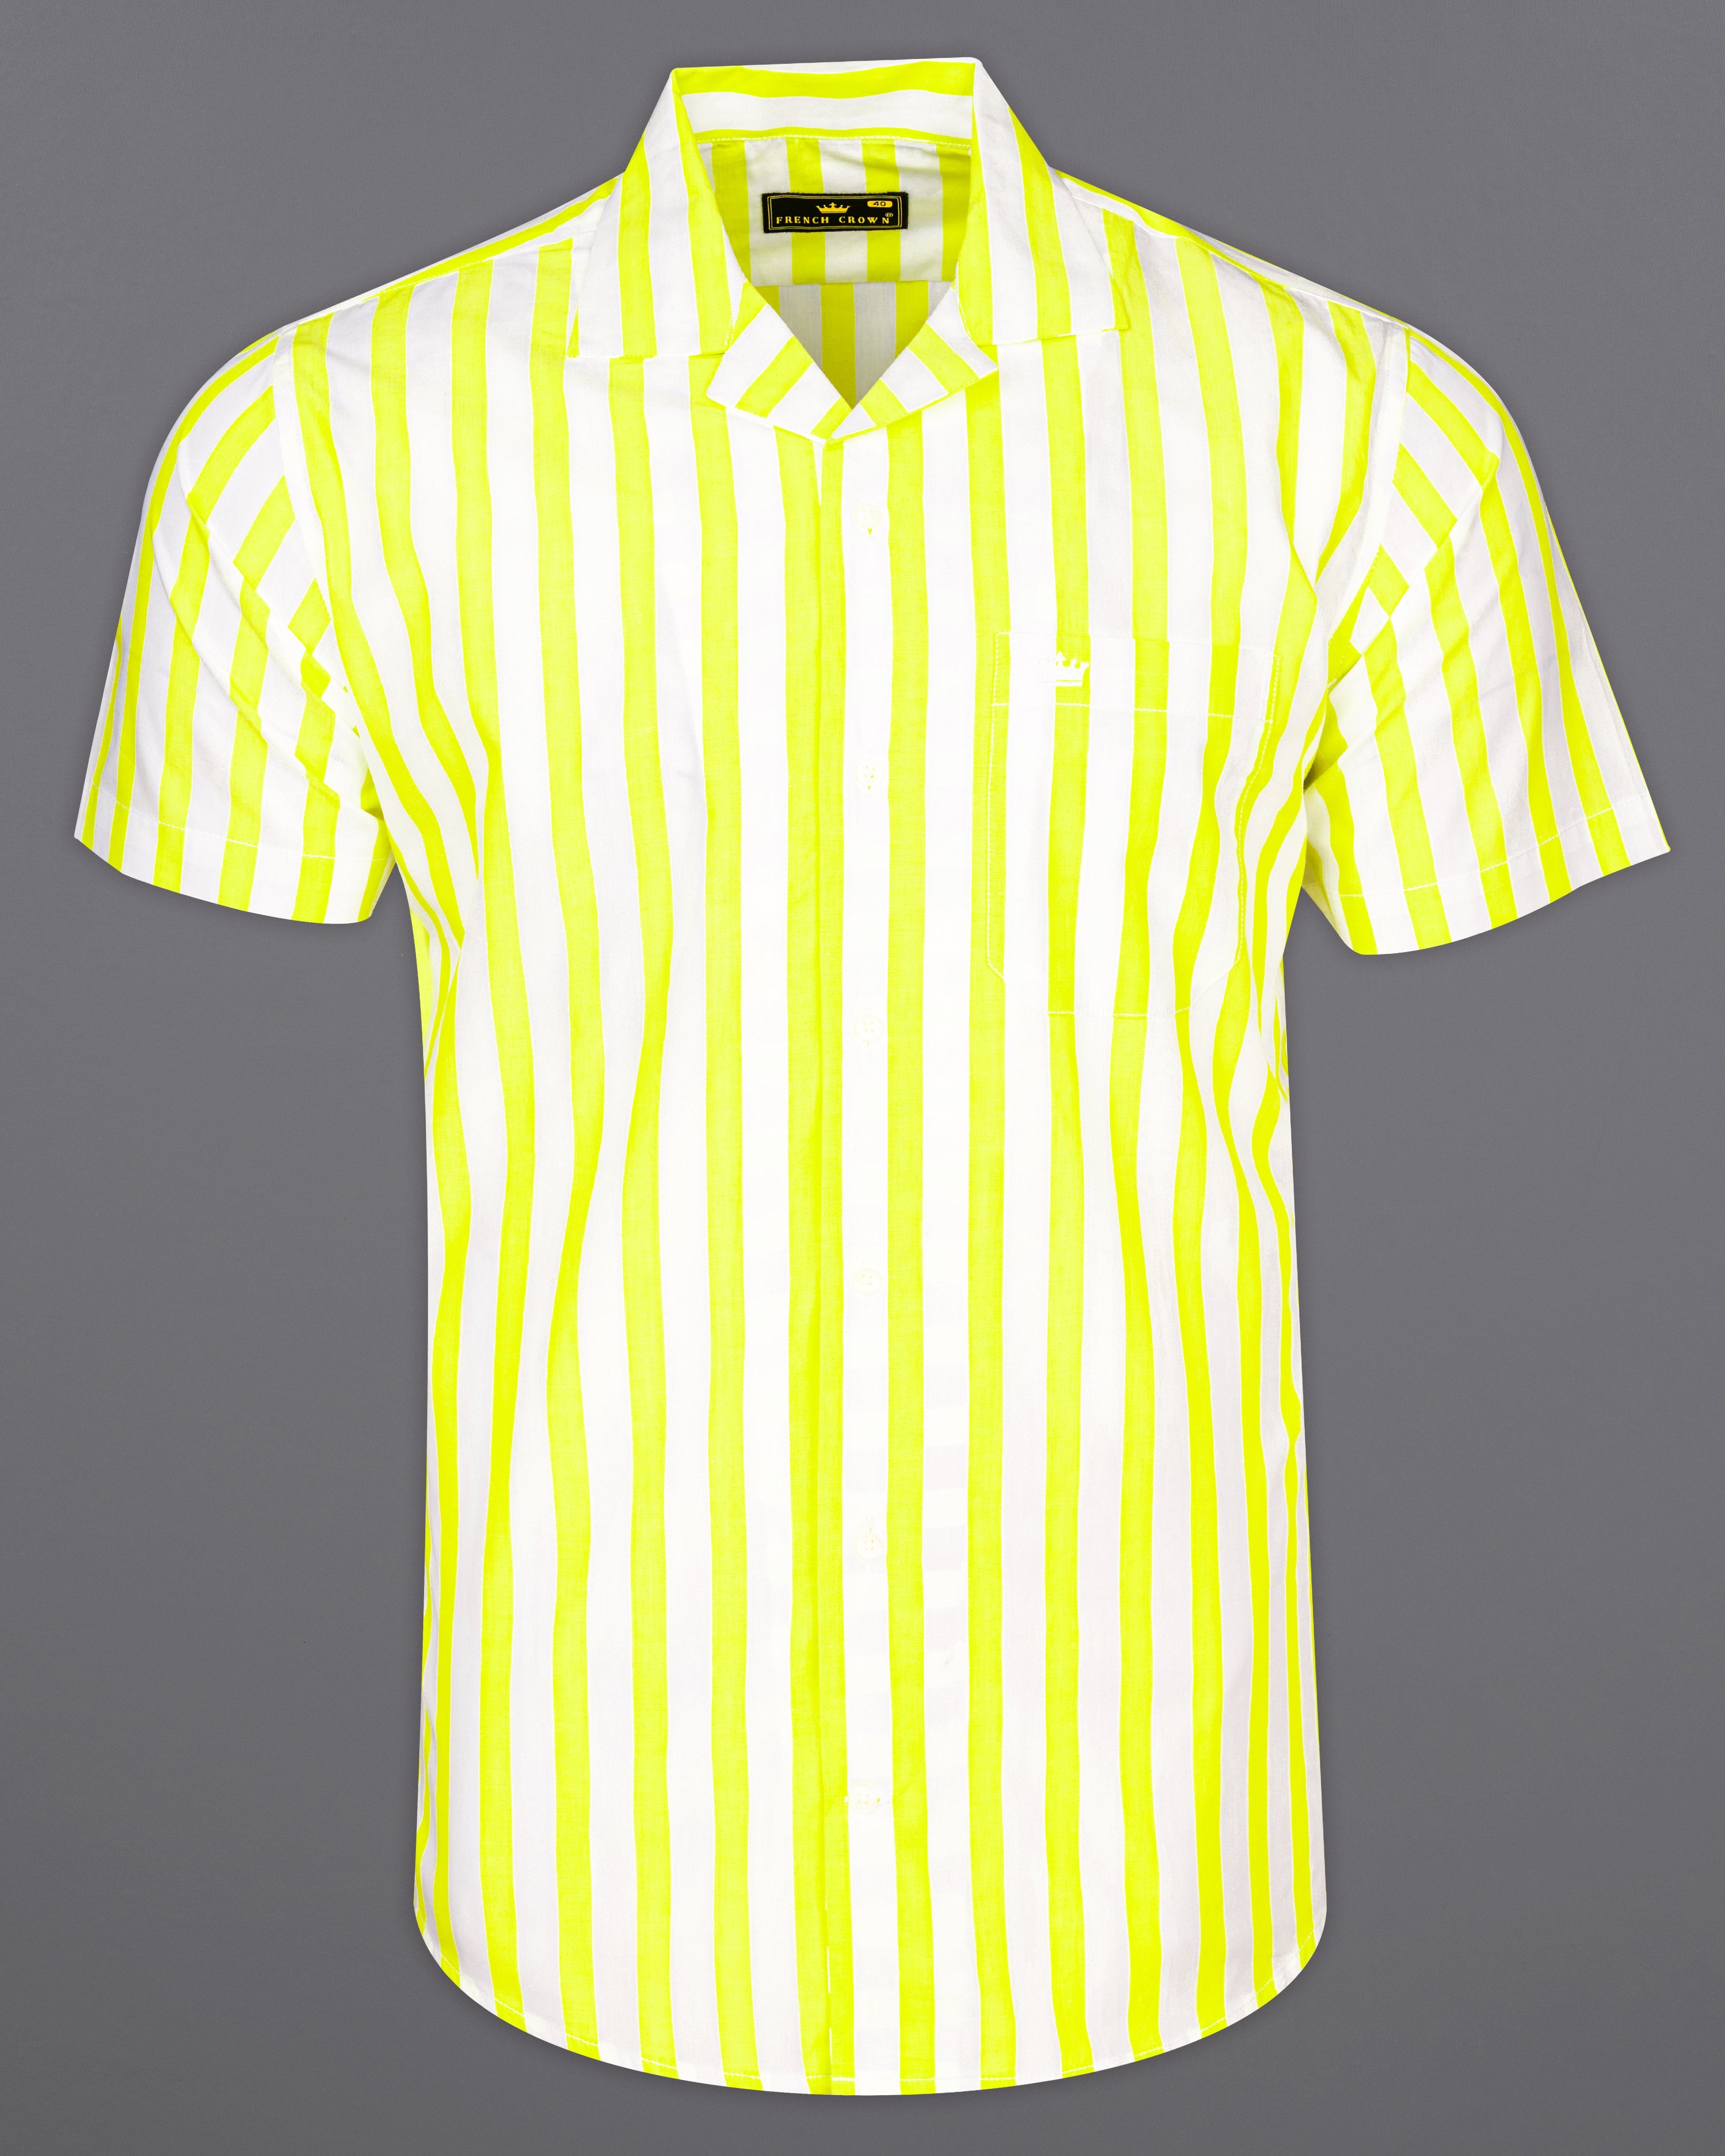 Custard Neon Yellow with White Striped Half-Sleeved Premium Cotton Shirt 9717-CC-SS-38, 9717-CC-SS-39, 9717-CC-SS-40, 9717-CC-SS-42, 9717-CC-SS-44, 9717-CC-SS-46, 9717-CC-SS-48, 9717-CC-SS-50, 9717-CC-SS-52